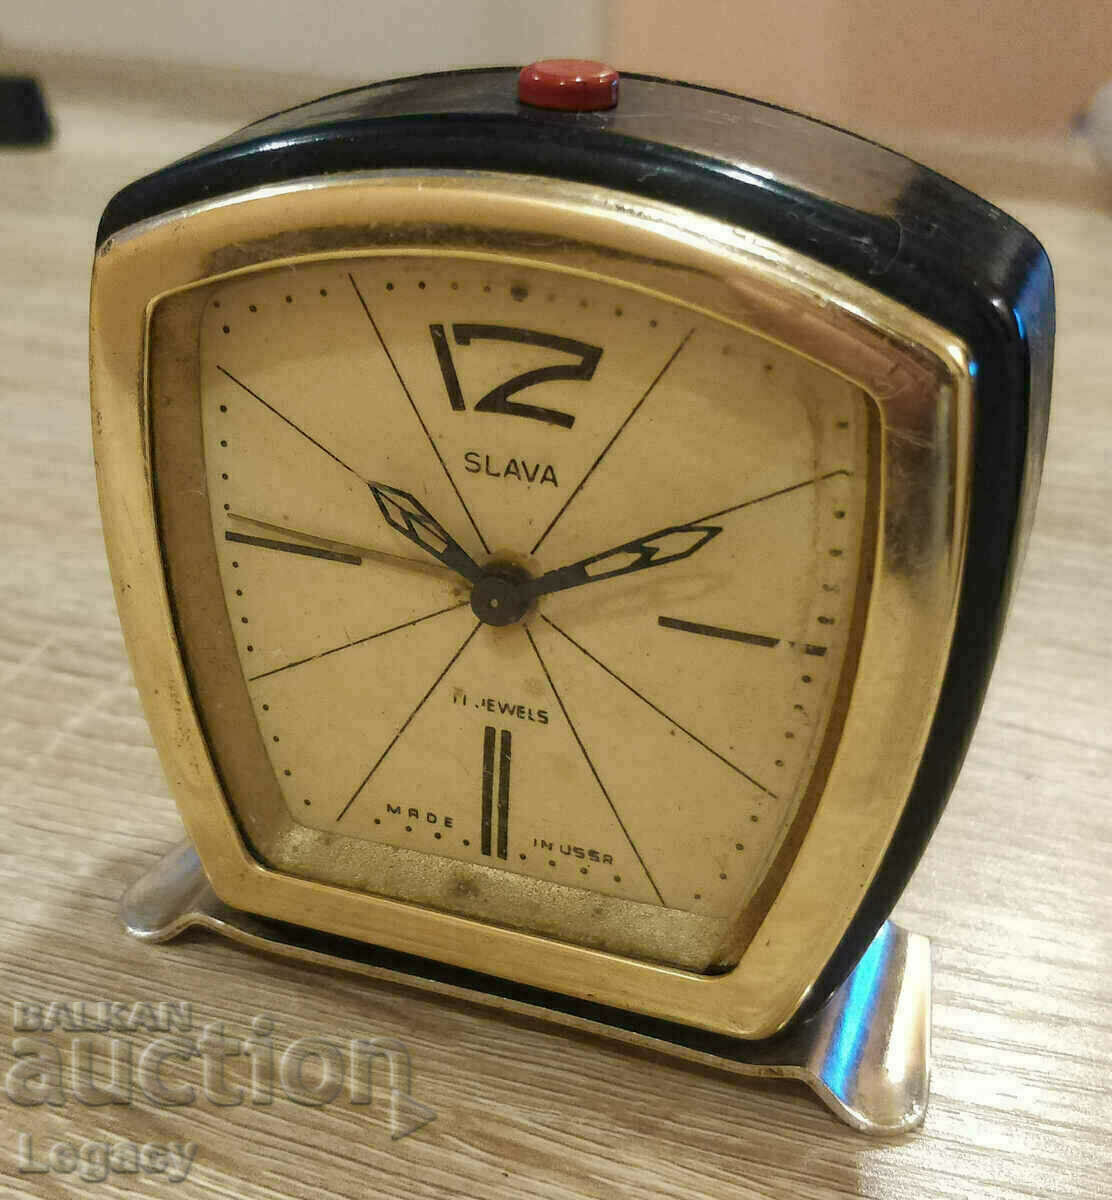 Alarm clock SLAVA / SLAVA 11 jewels USSR